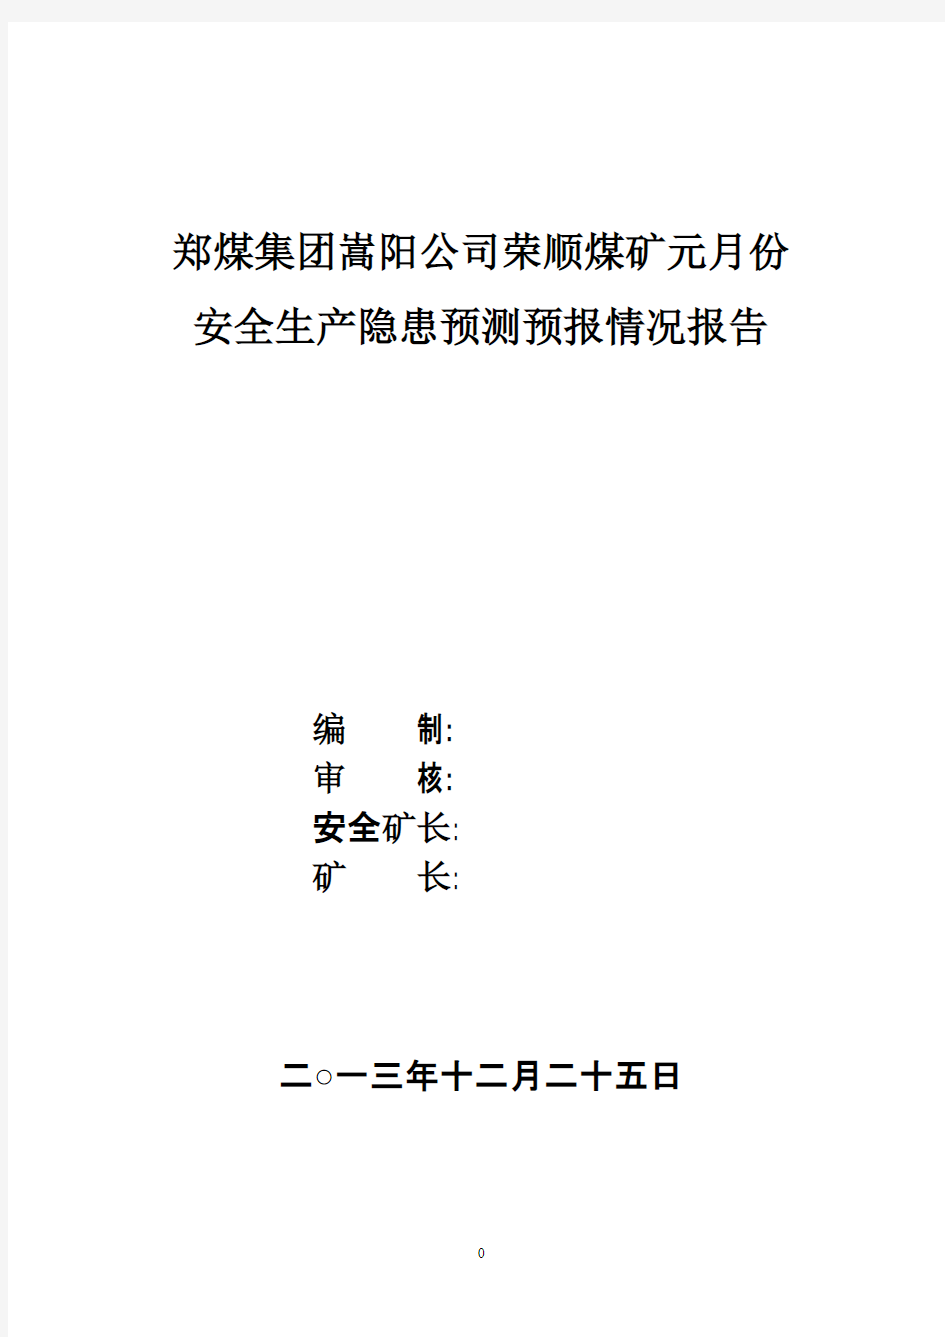 Removed_荣顺煤矿2014年1月份隐患预测预报(出3份)1